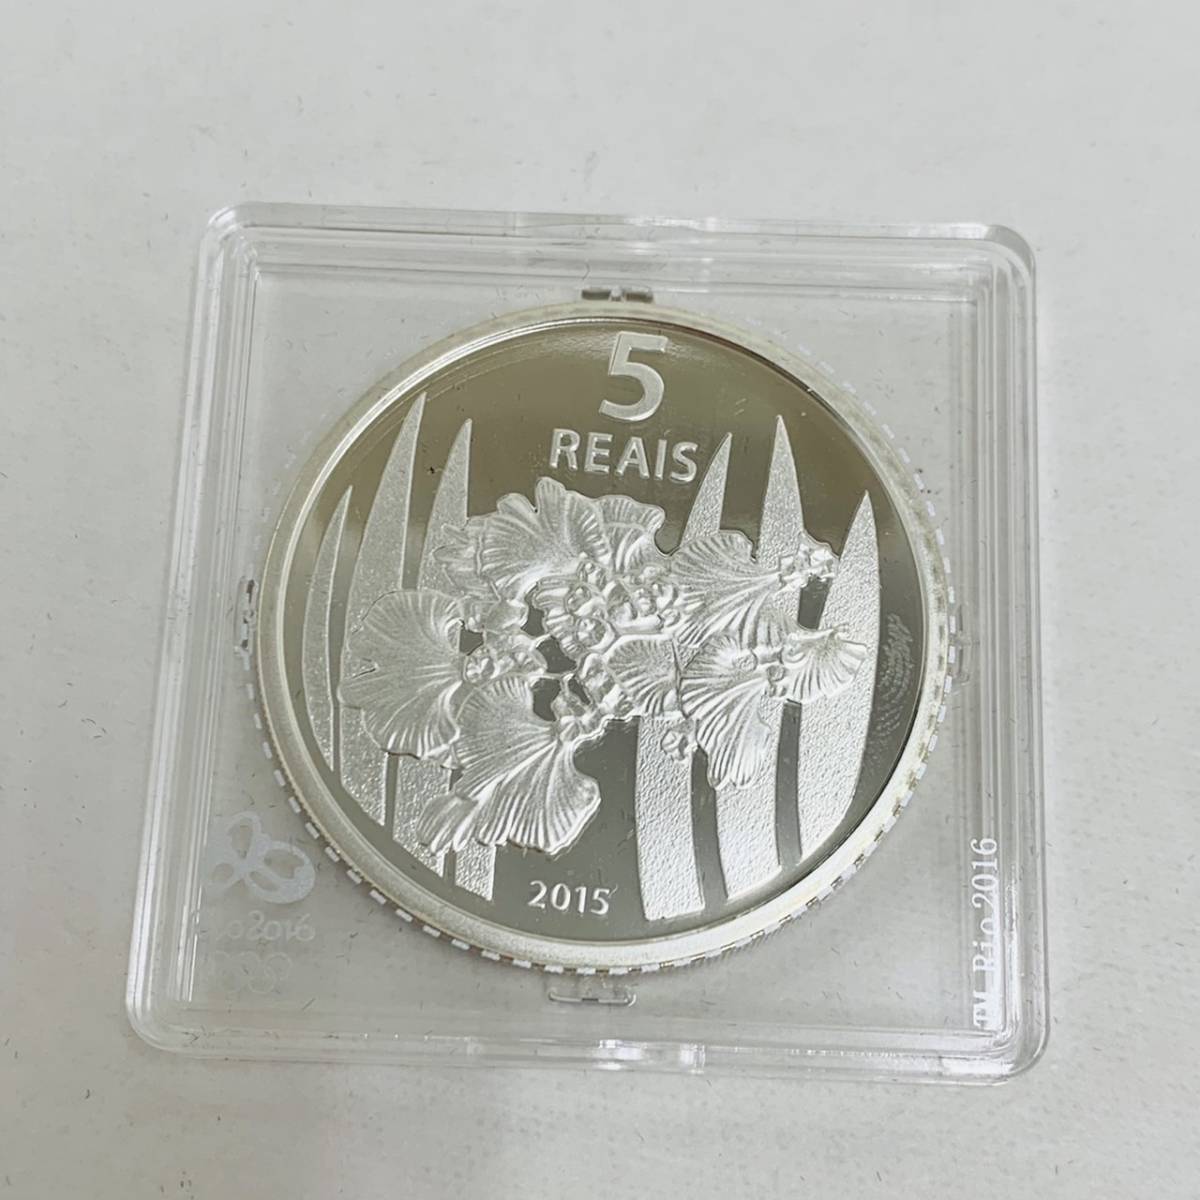 5017 / Rio 2016 リオ オリンピック 5REALS 925 コイン コレクション